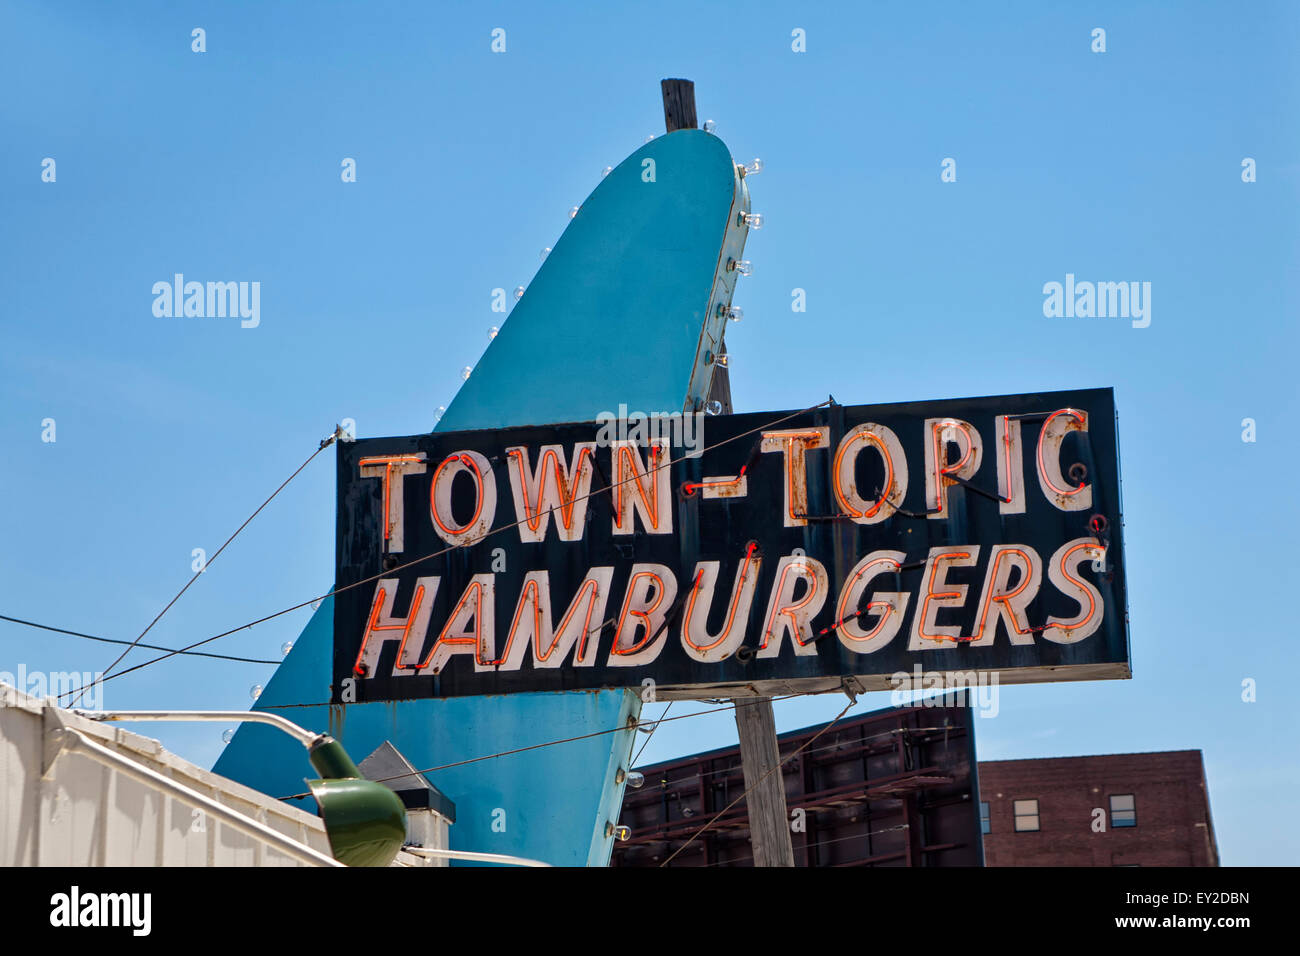 Town Topic Hamburgers Diner in Kansas City, Missouri Stock Photo